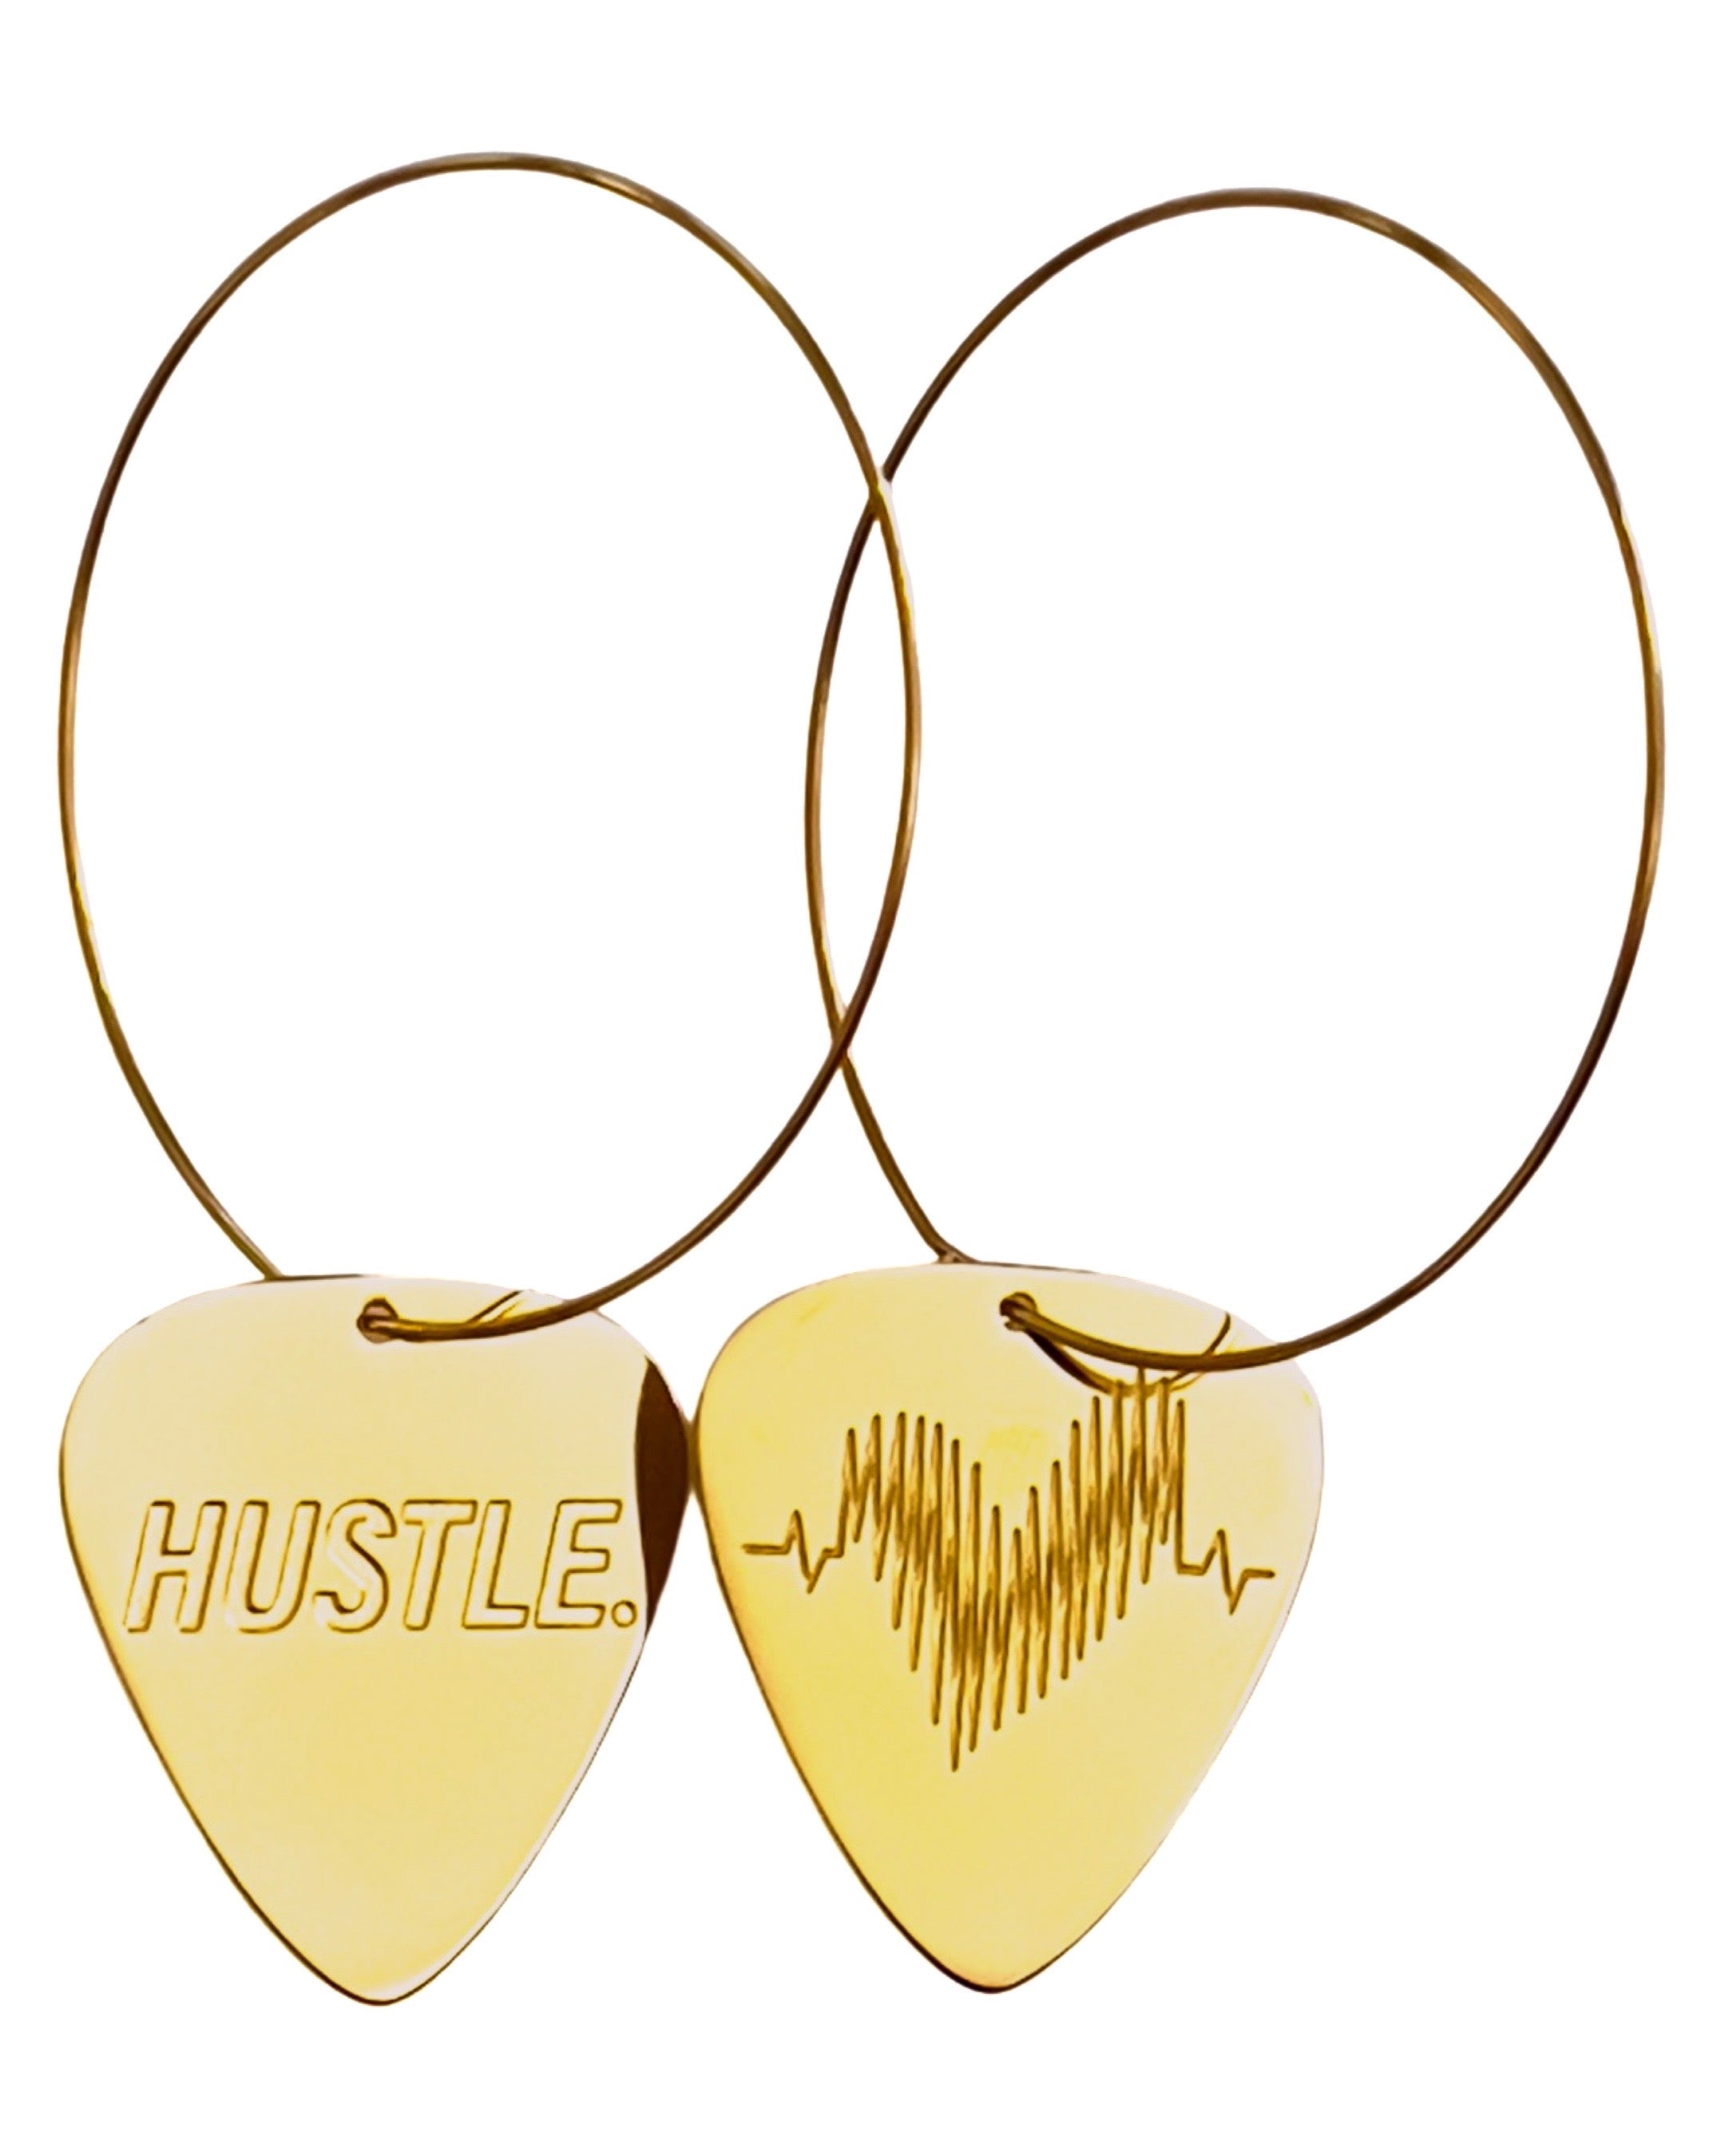 WS HUSTLE. Gold Reversible Single Guitar Pick Earrings